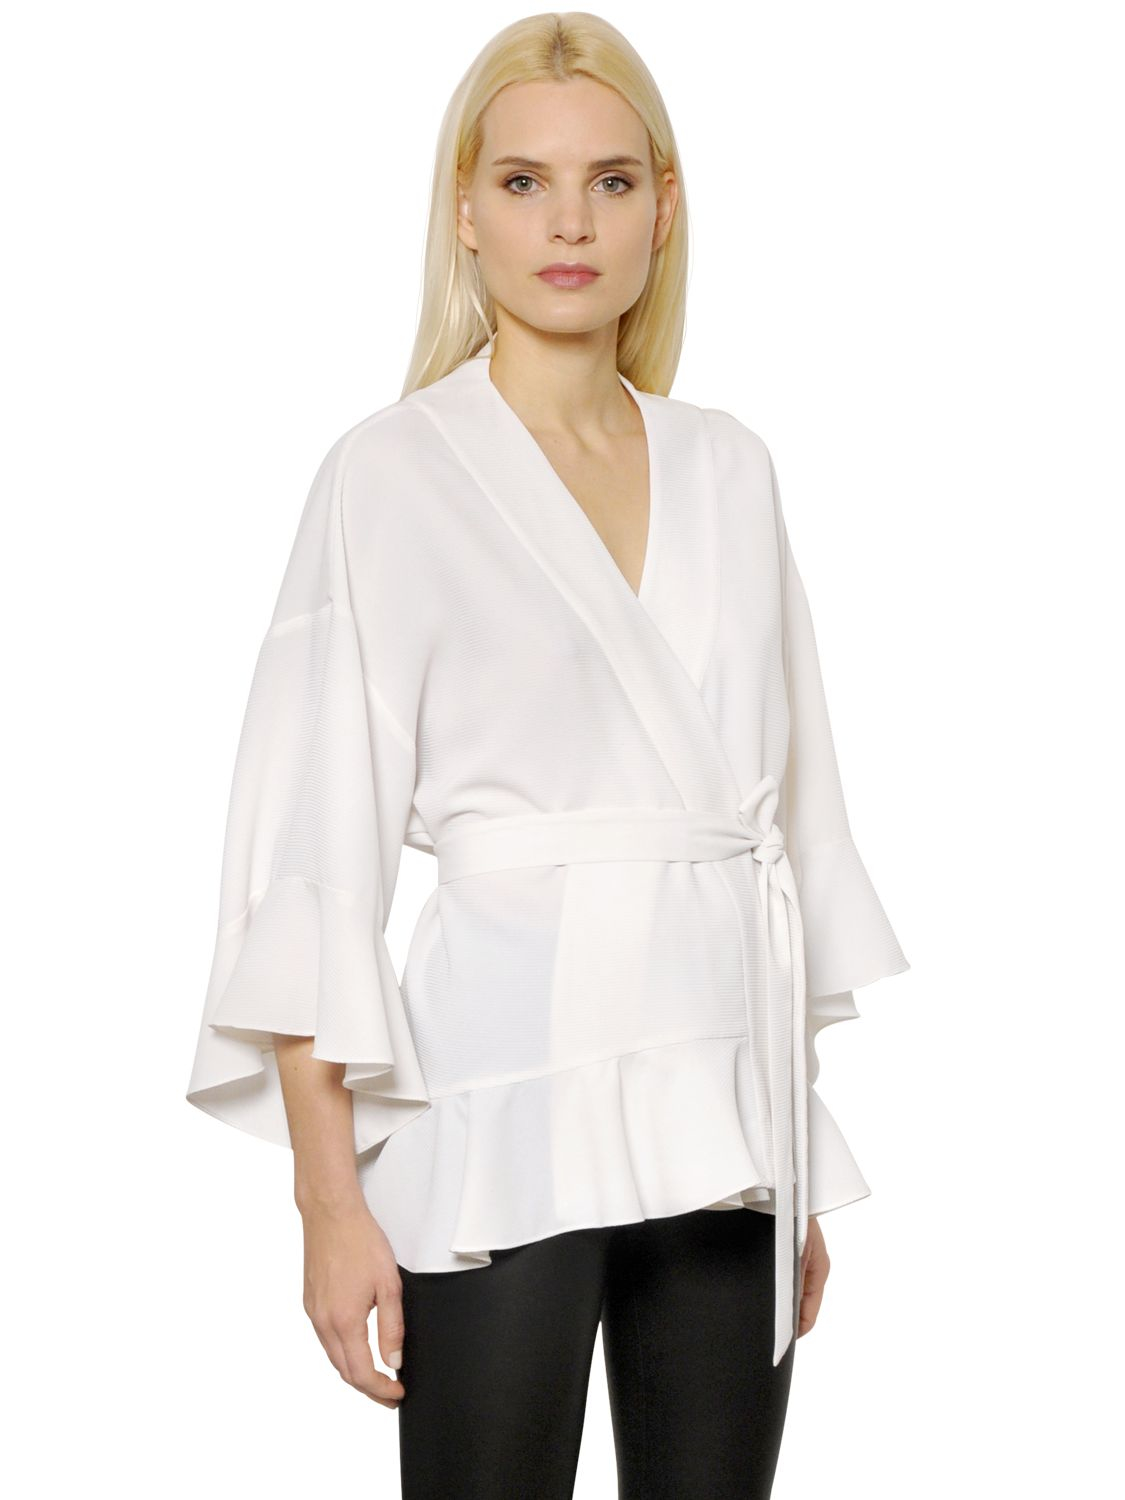 Designers Remix Ottoman Kimono Wrap Top With Ruffles in White - Lyst